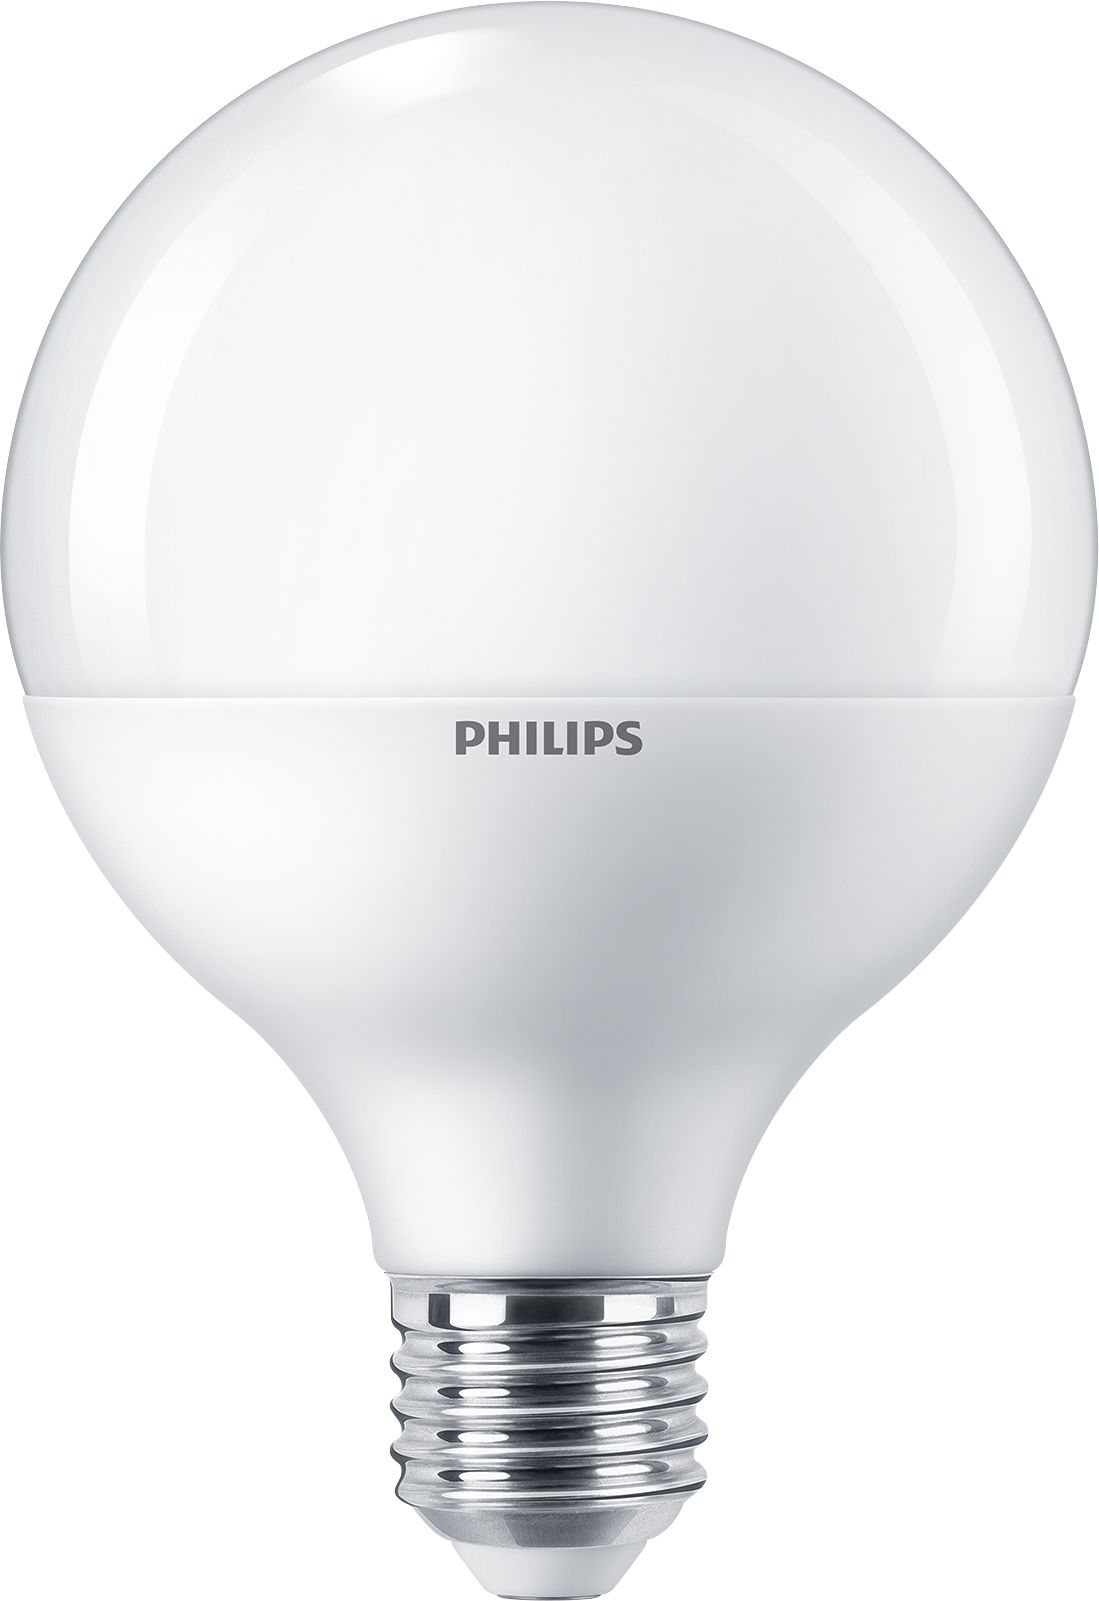 Compare our Choose a bulb